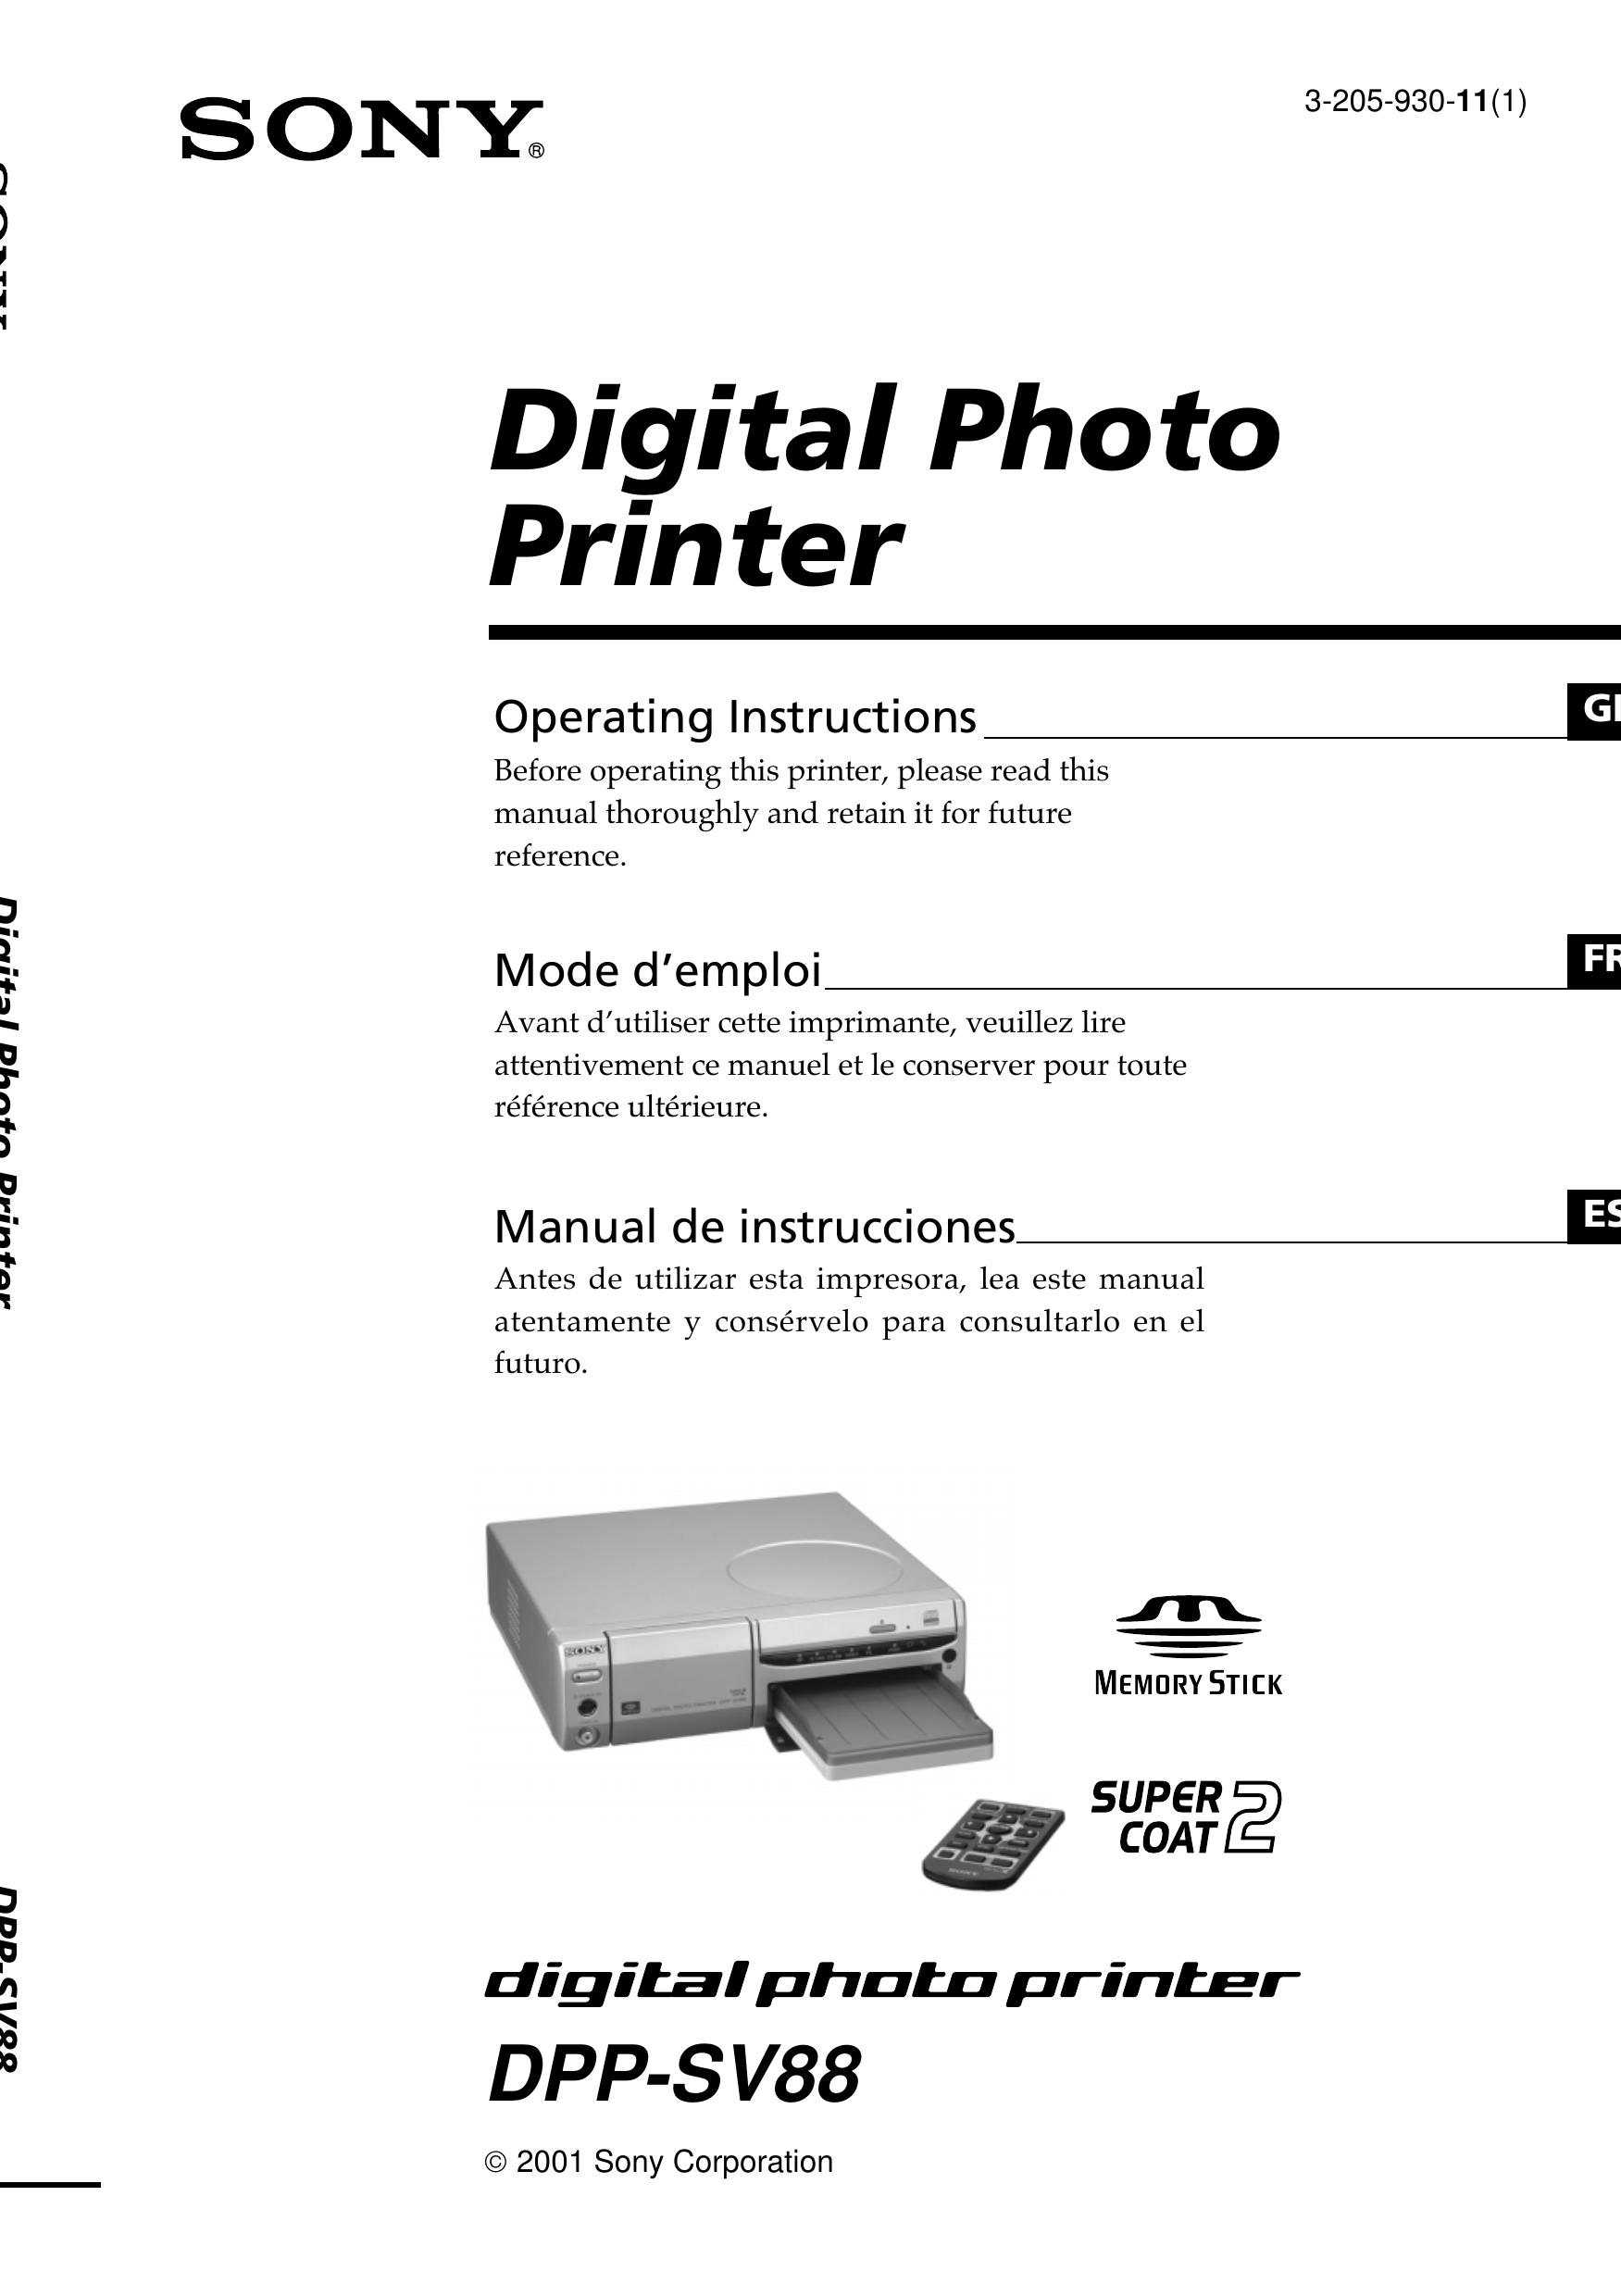 Sony DPP-SV88 Photo Printer User Manual